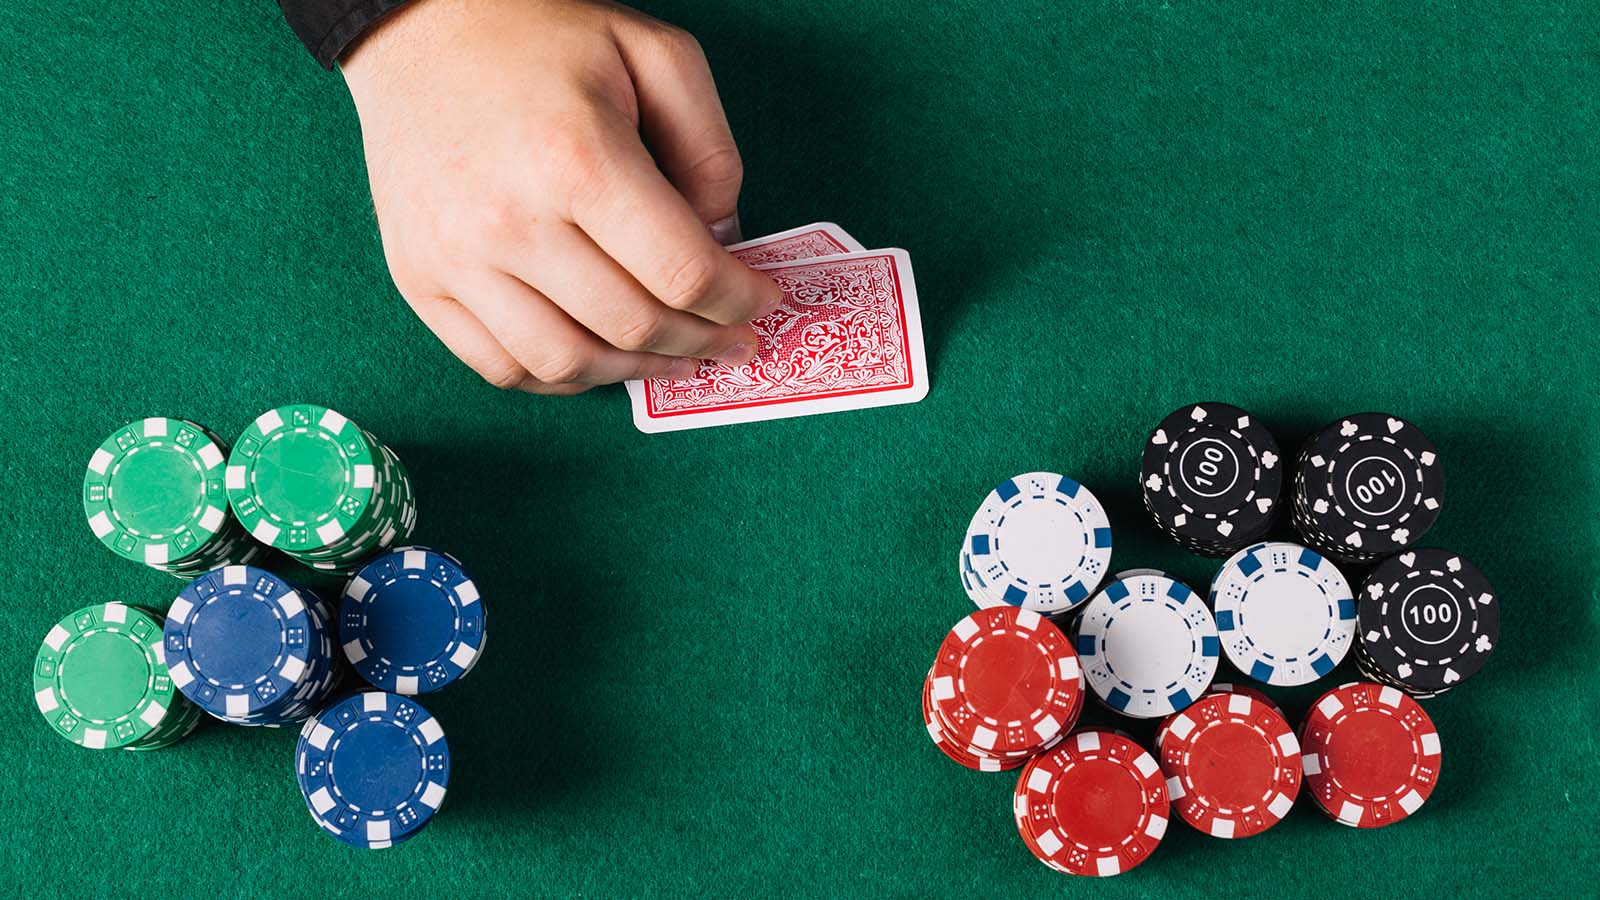 Can Strategies Improve My Blackjack Odds